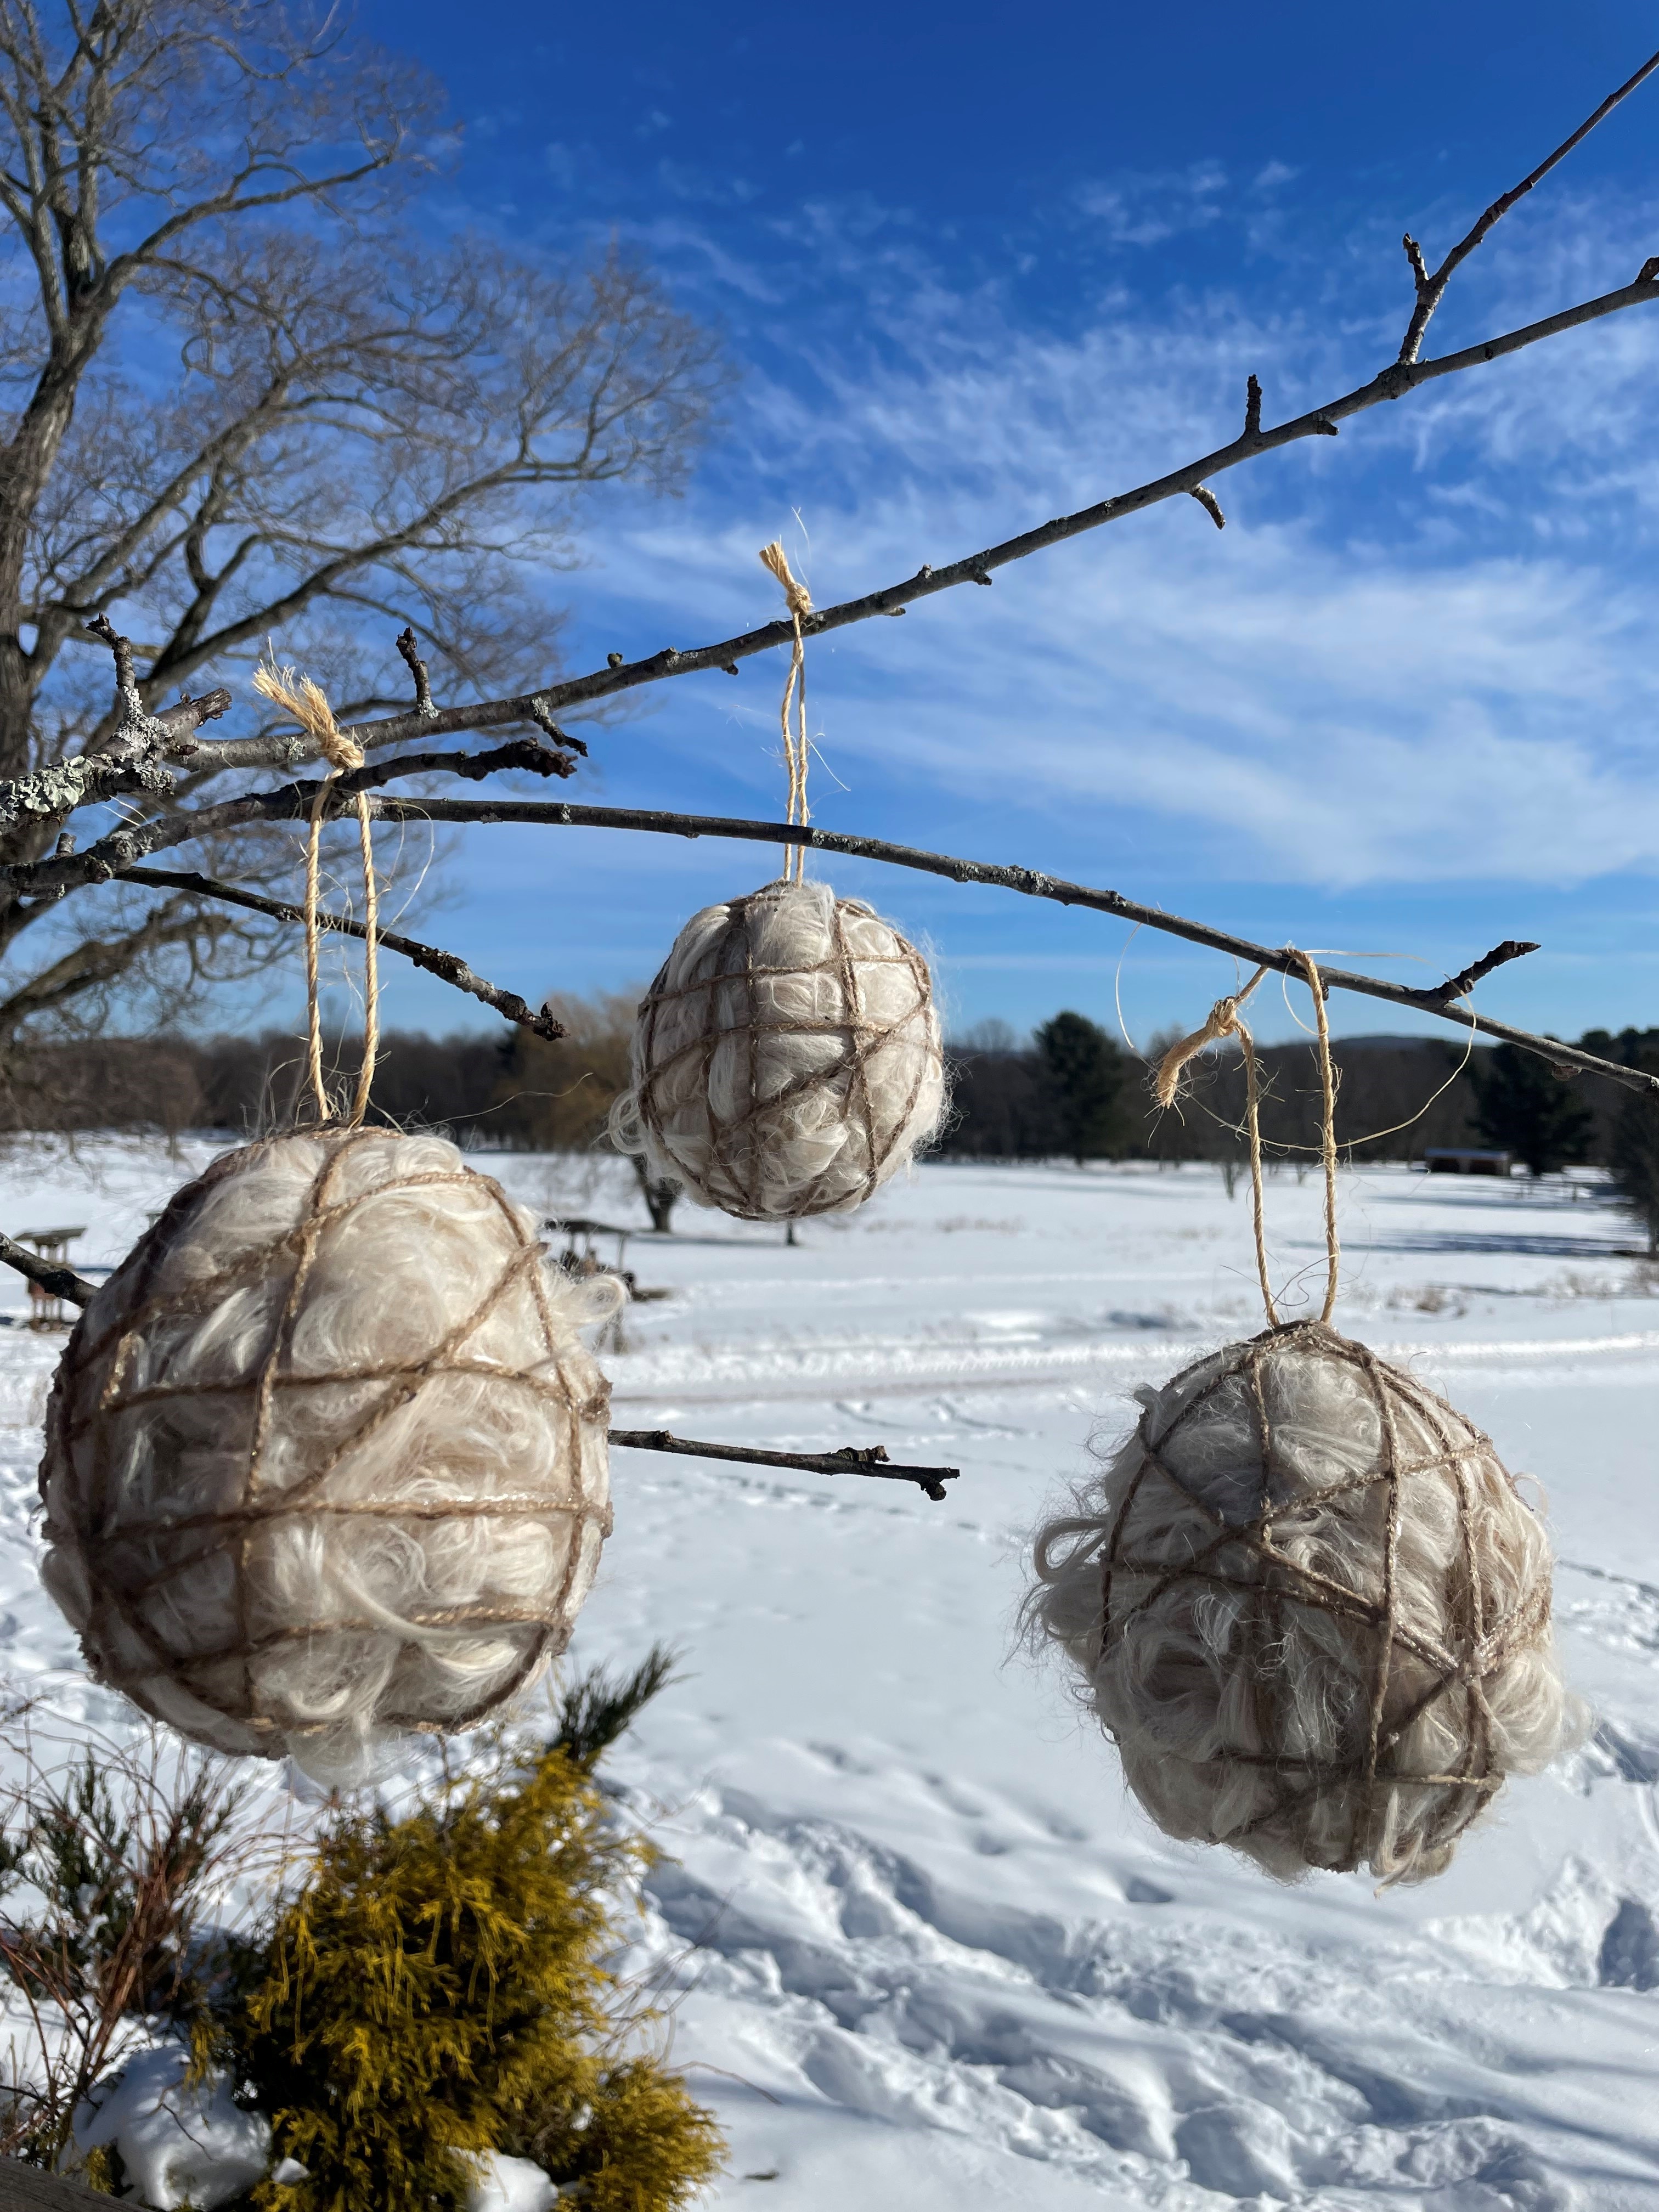 Nesting Balls